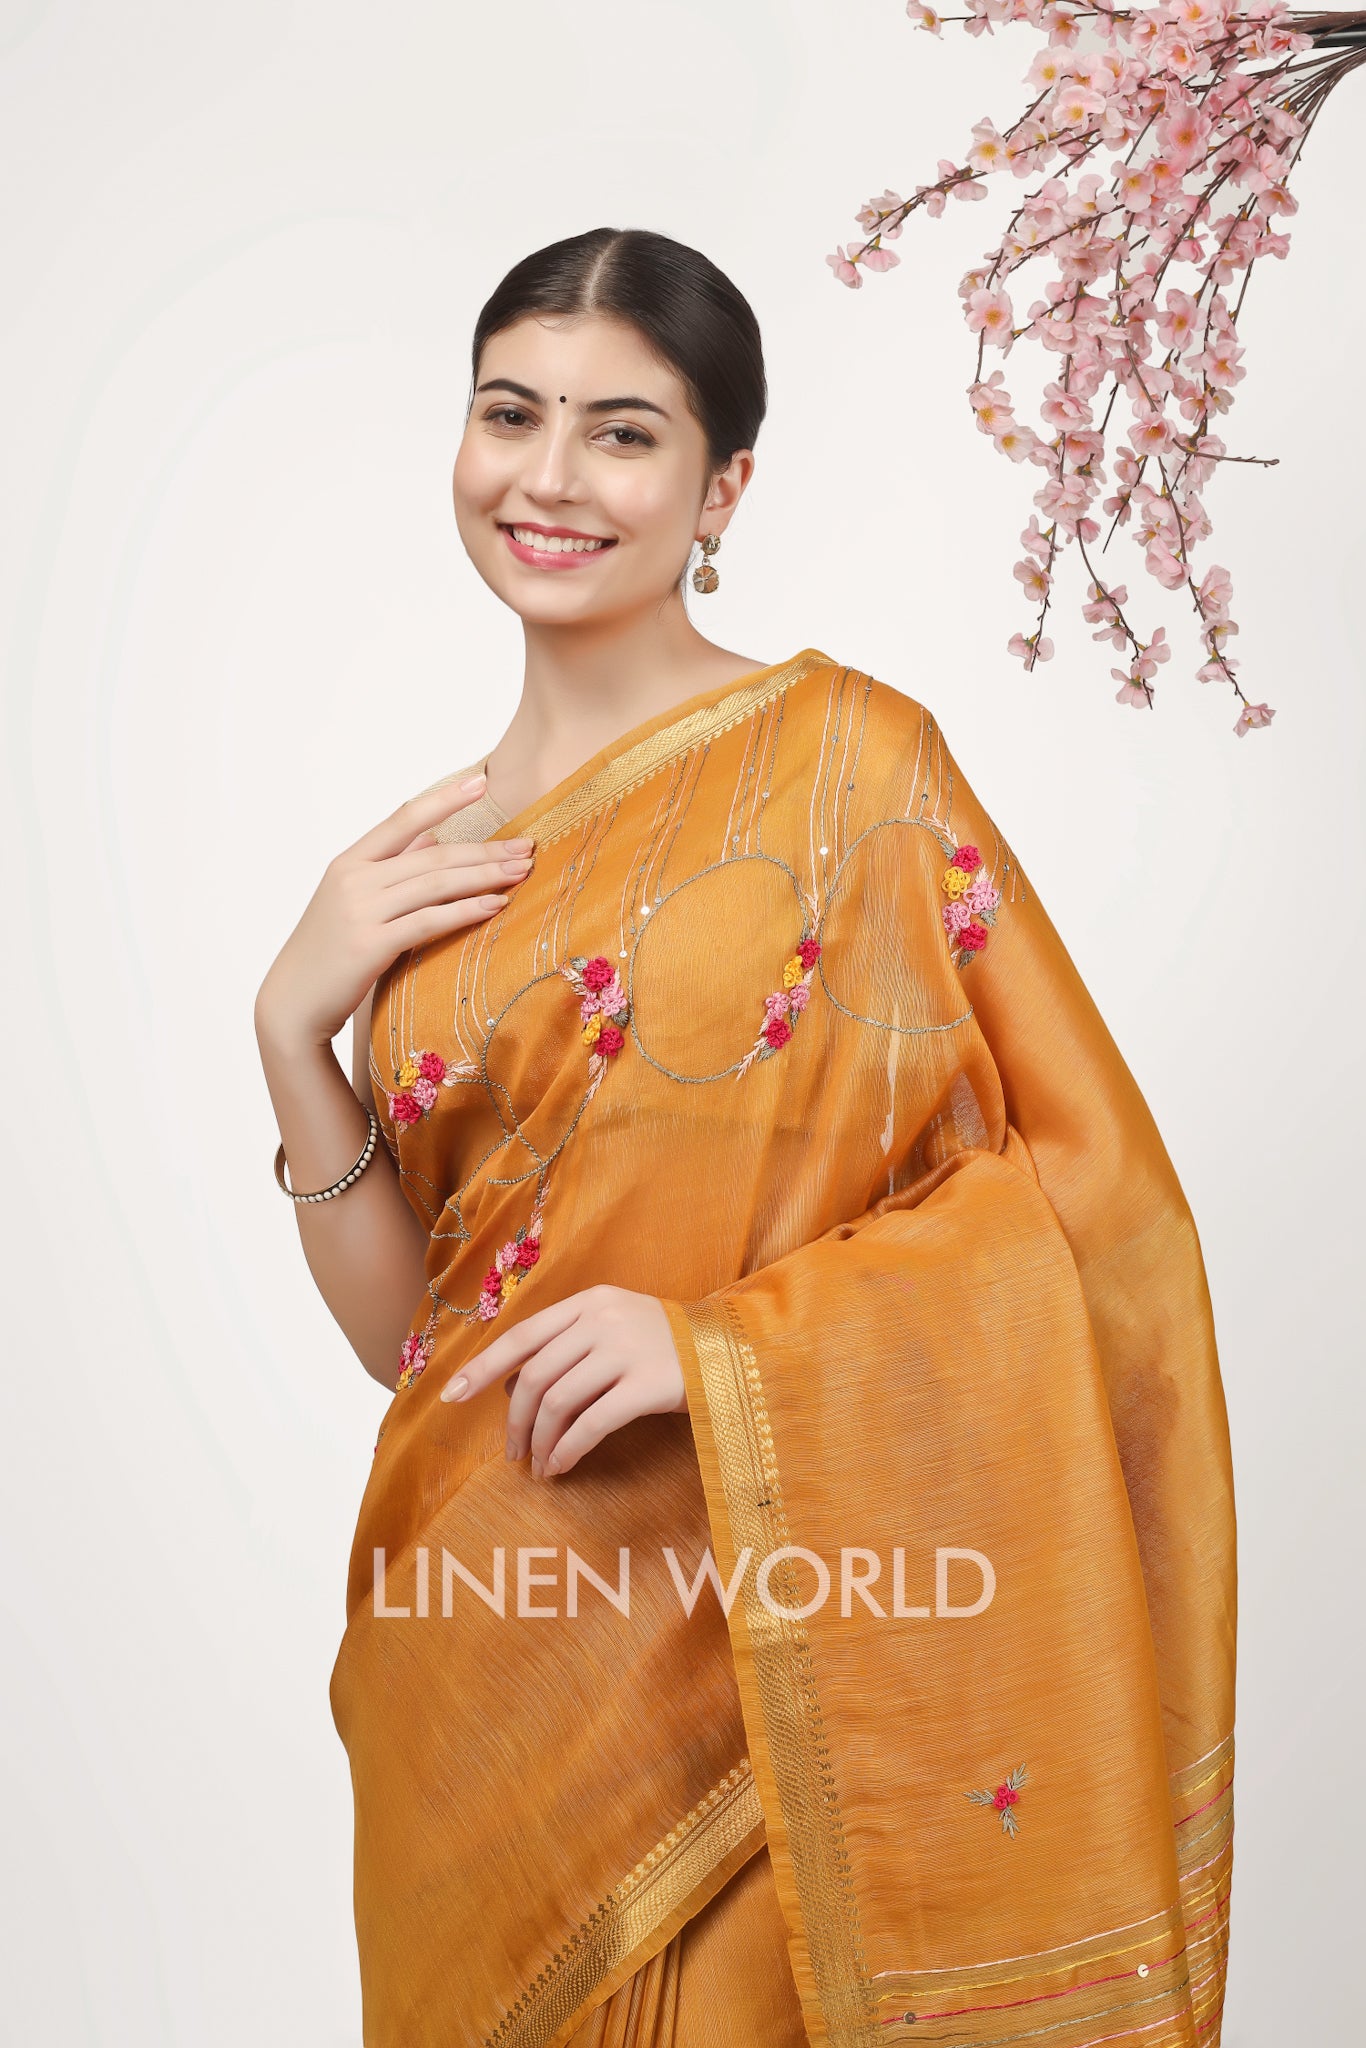 nida - french knot dull orange silk linen sari - linenworldonline.in